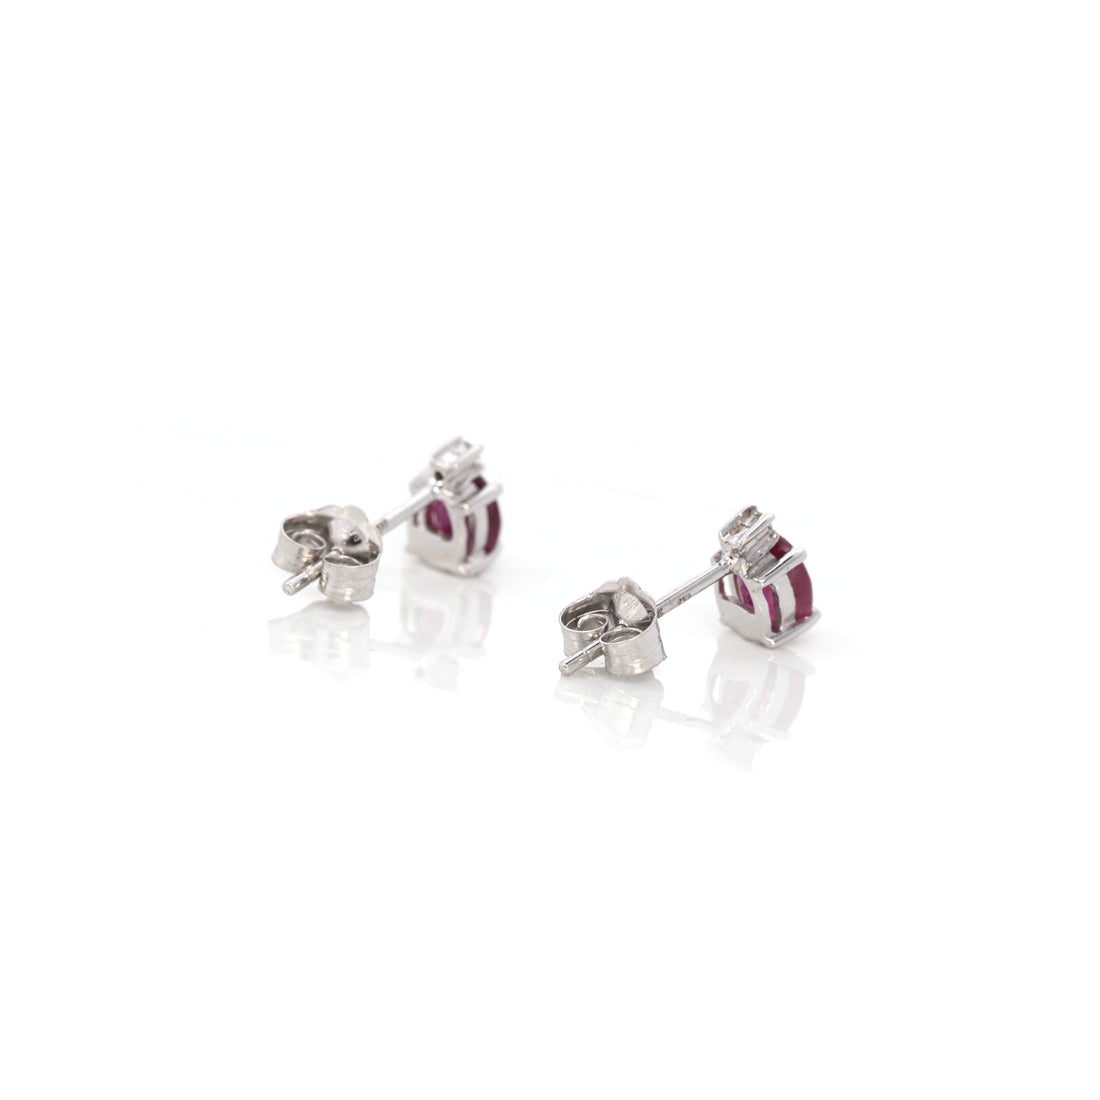 Baikalla Jewelry Gold Gemstone Earrings Baikalla 14k Classic White Gold Natural 4*5mm 7/10ct Ruby Earrings w/Diamond